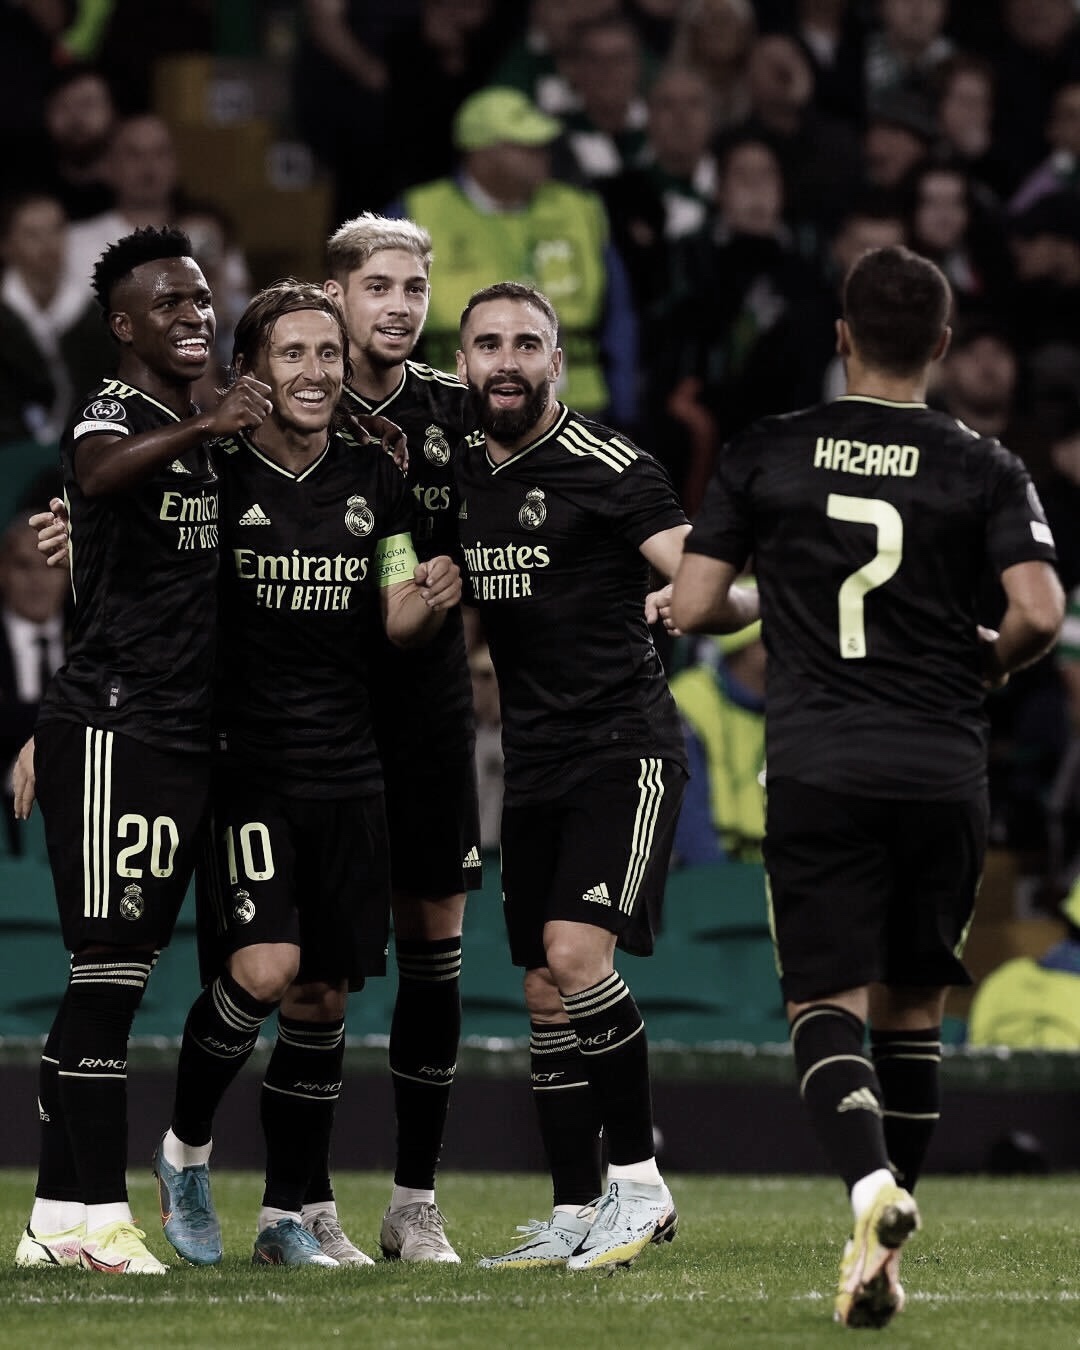 Celtic - Real Madrid: puntuaciones del Real Madrid en la primera jornada de la fase de grupos de la Champions League